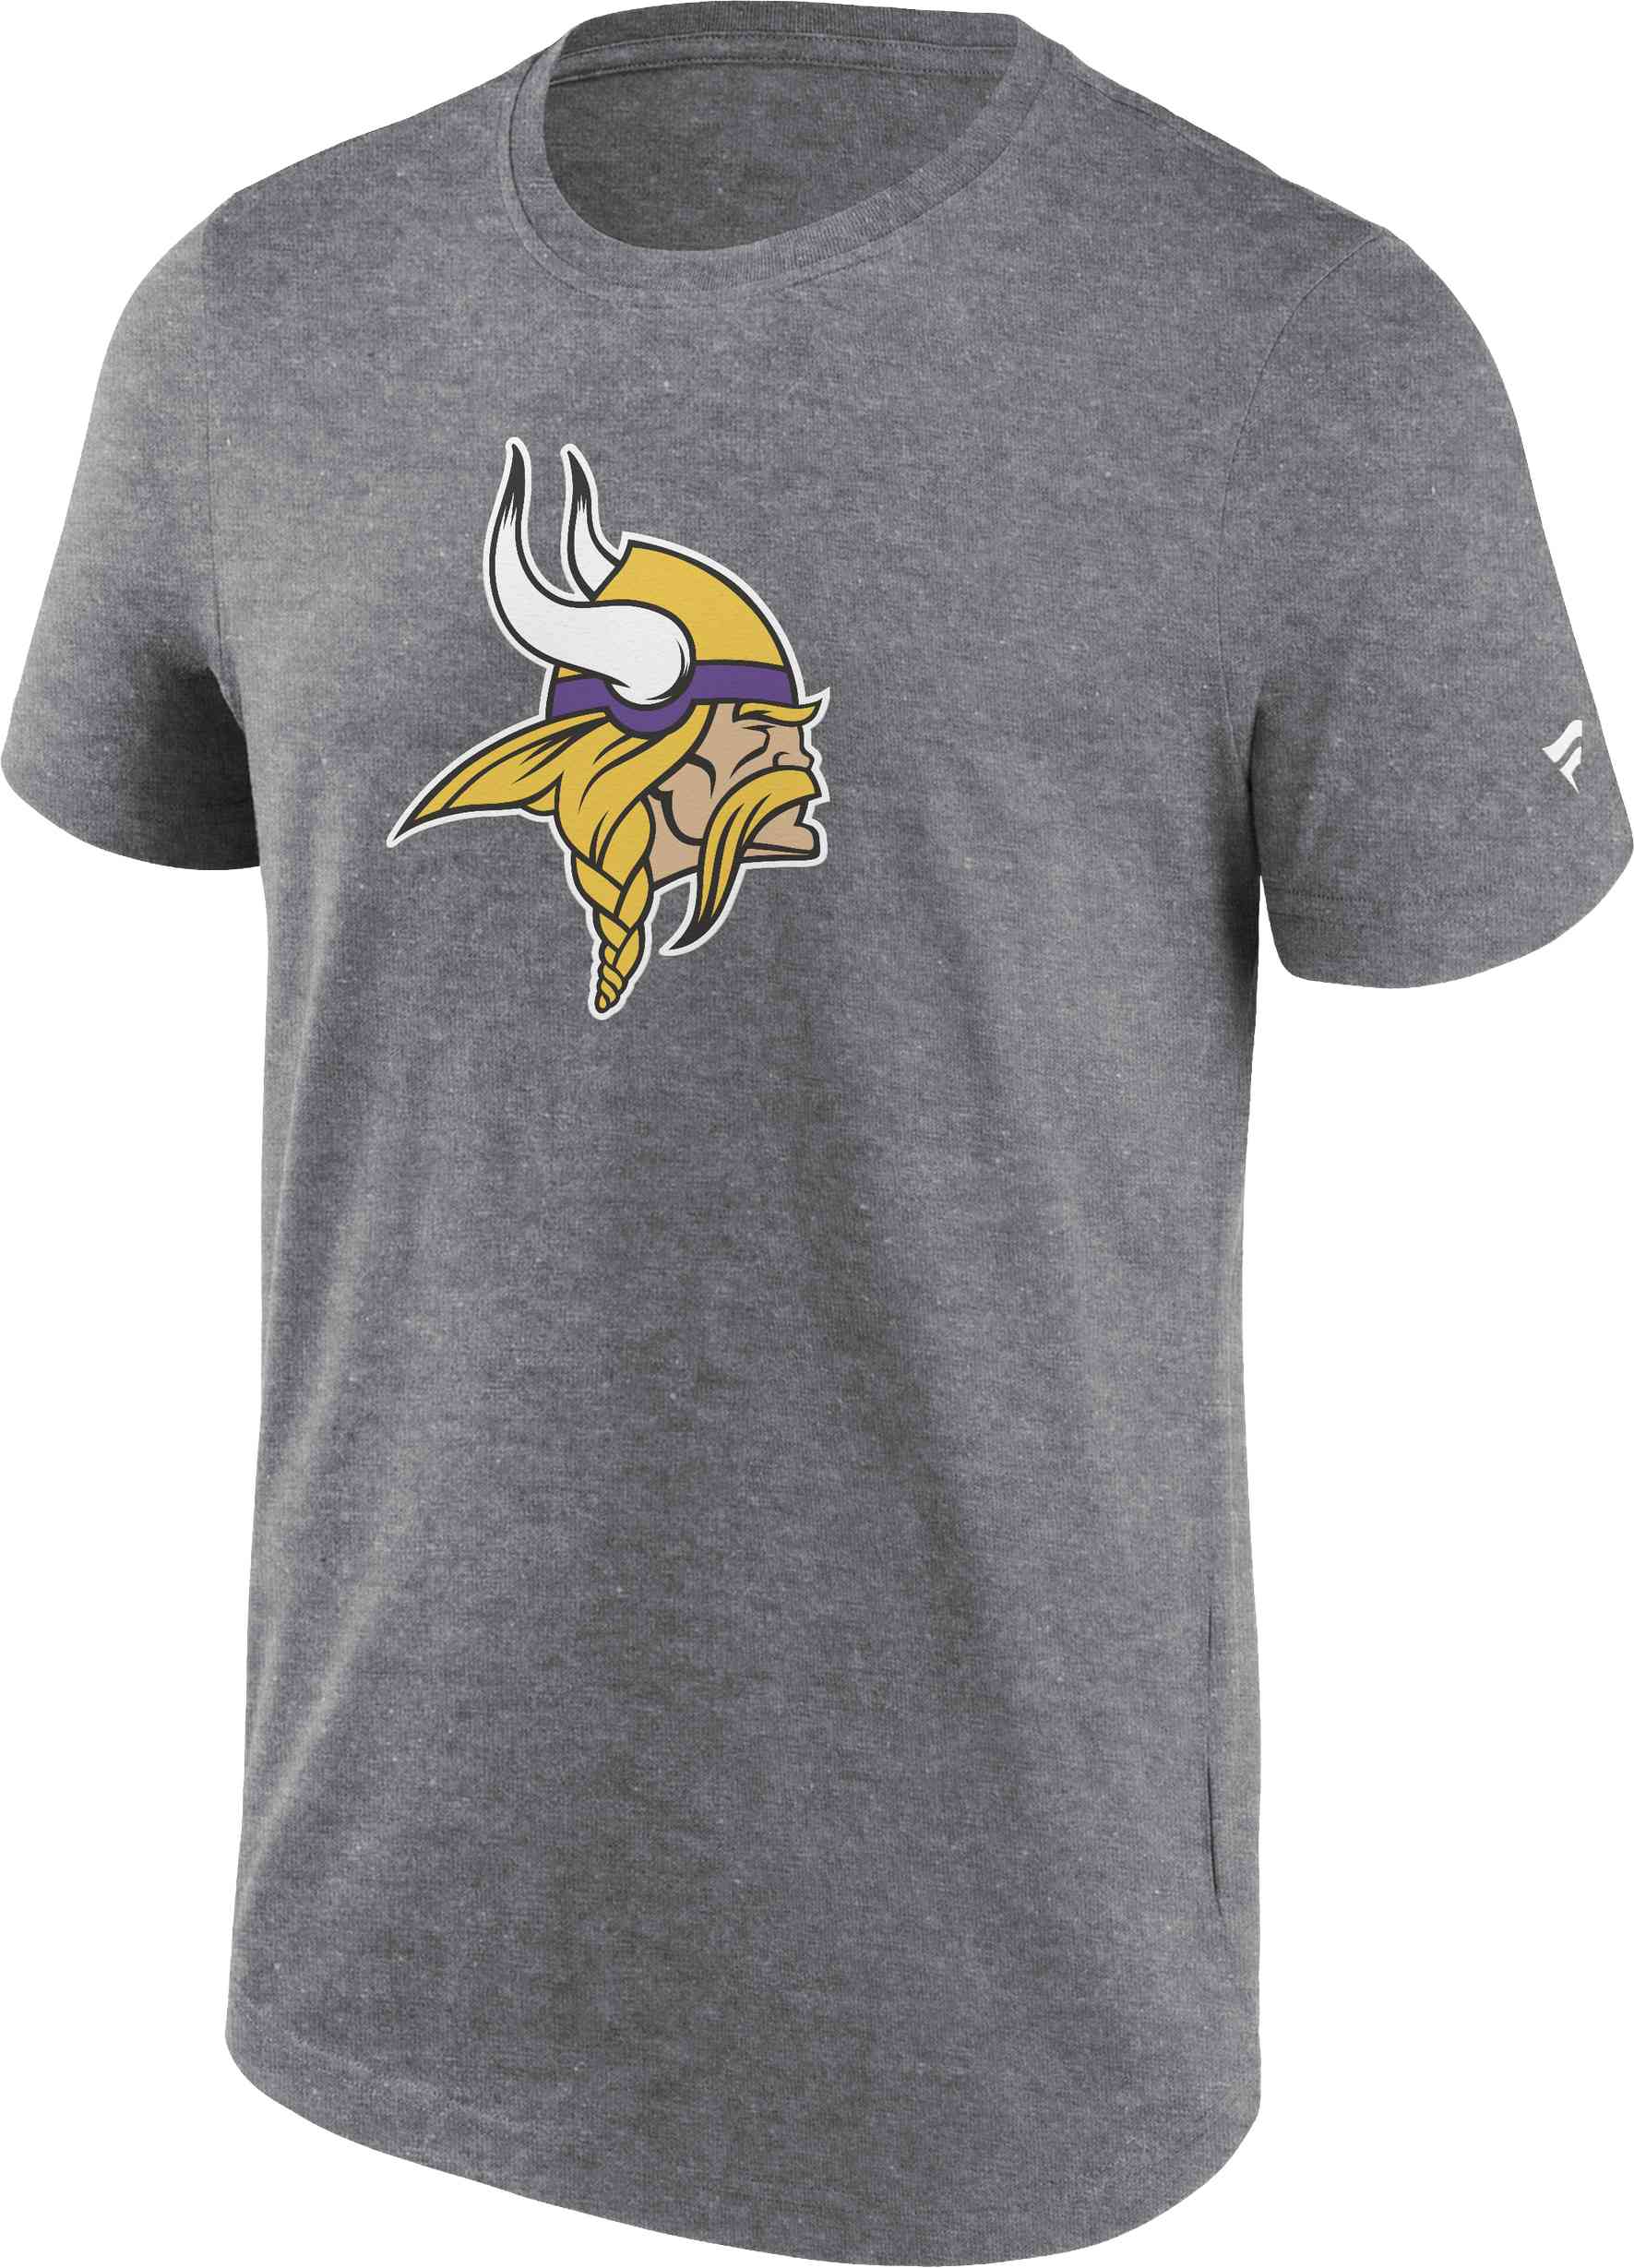 Fanatics - NFL Minnesota Vikings Primary Logo Graphic T-Shirt